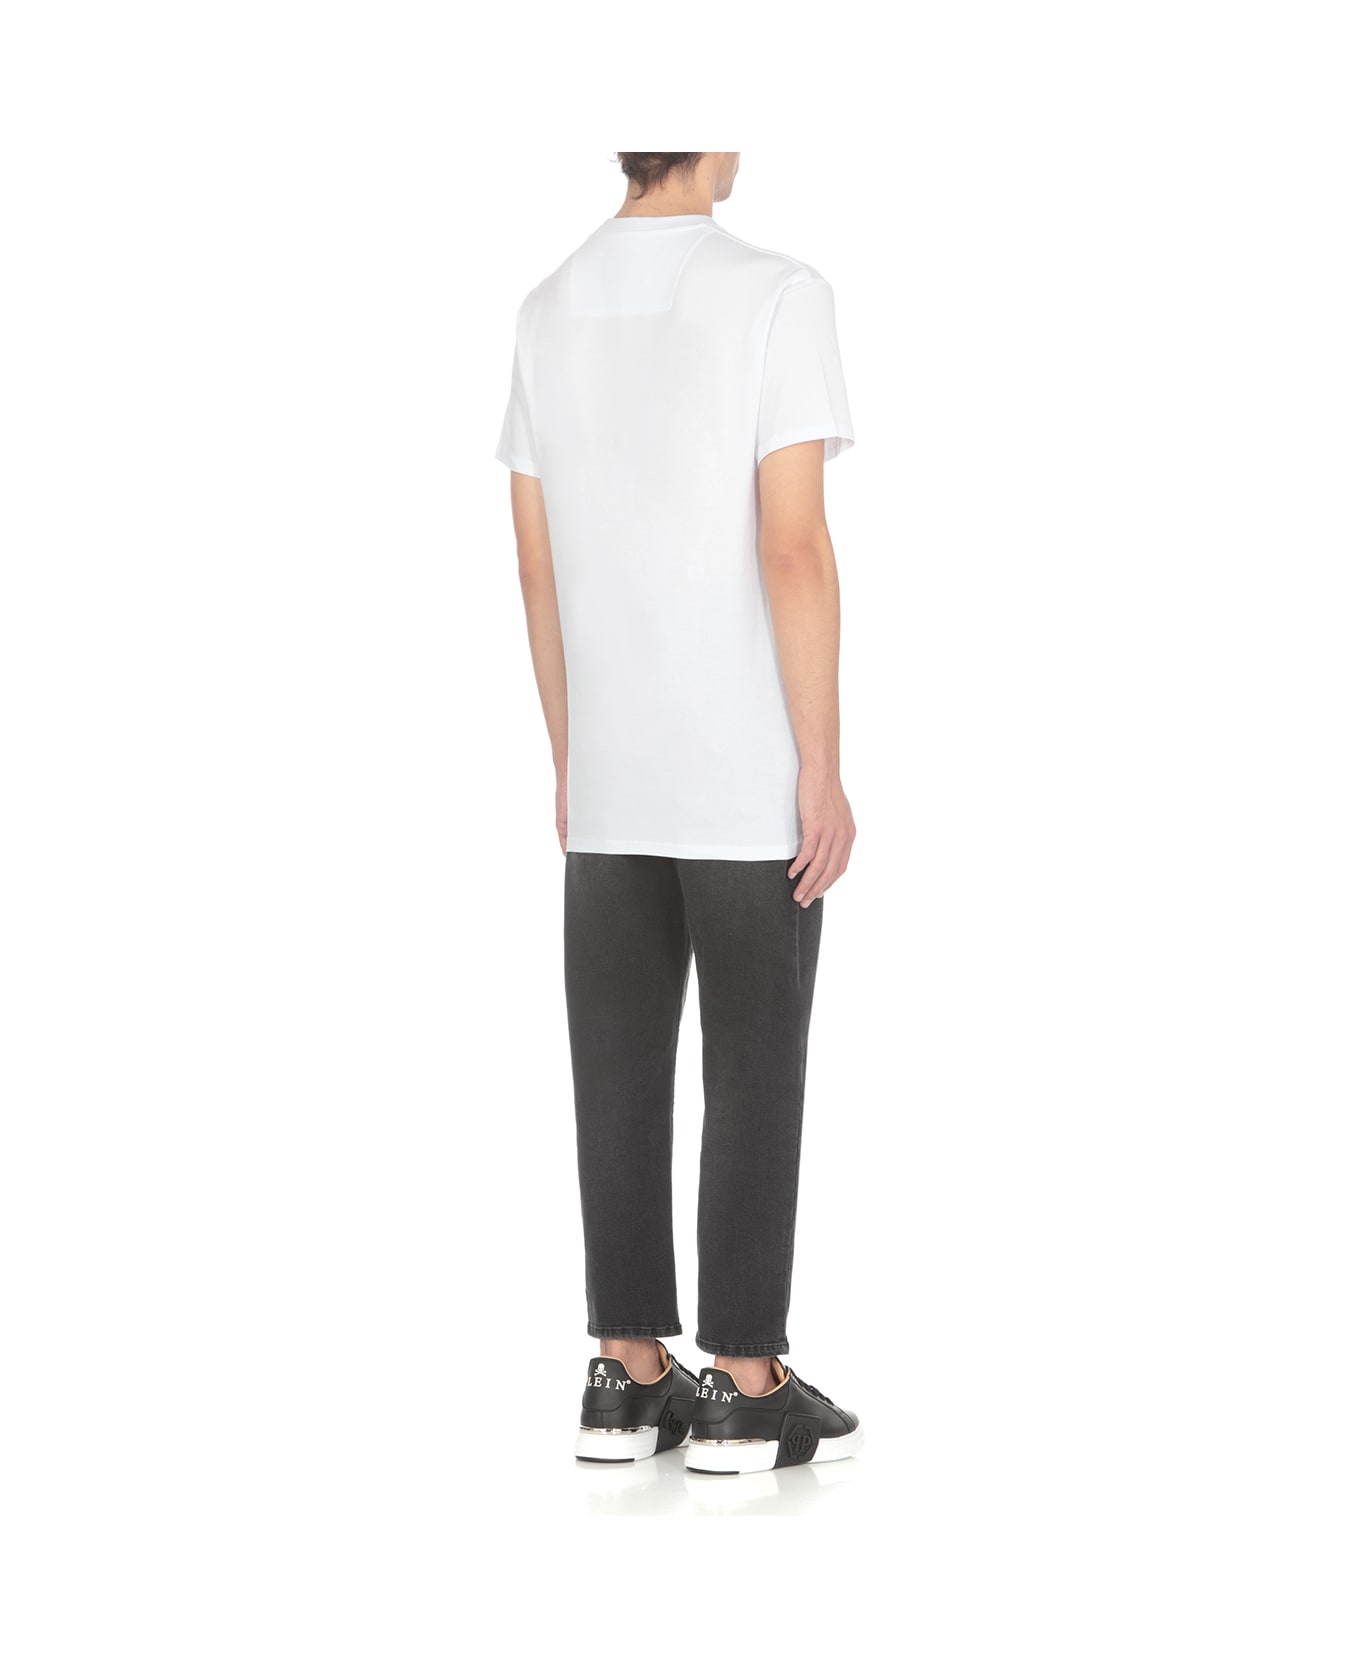 Philipp Plein Ss Hexagon T-shirt - White